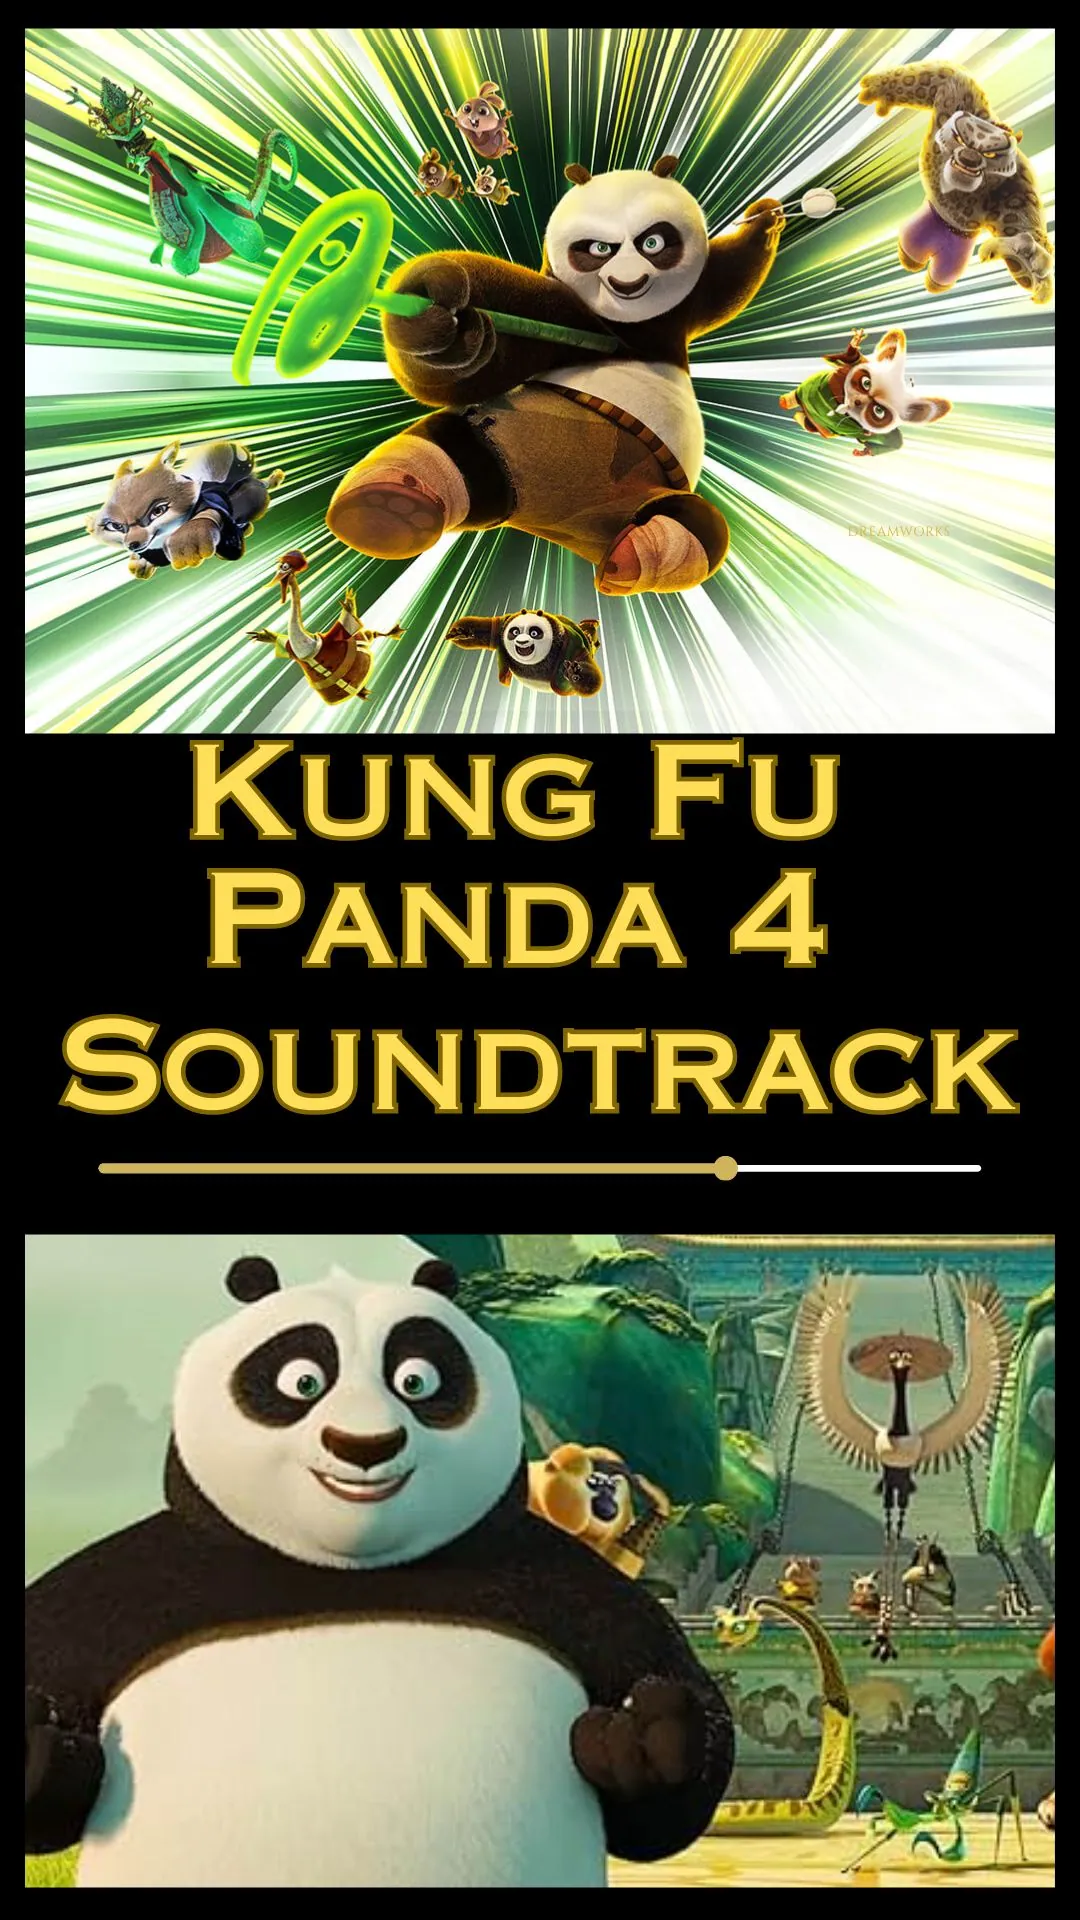 Kung Fu Panda 4 Soundtrack